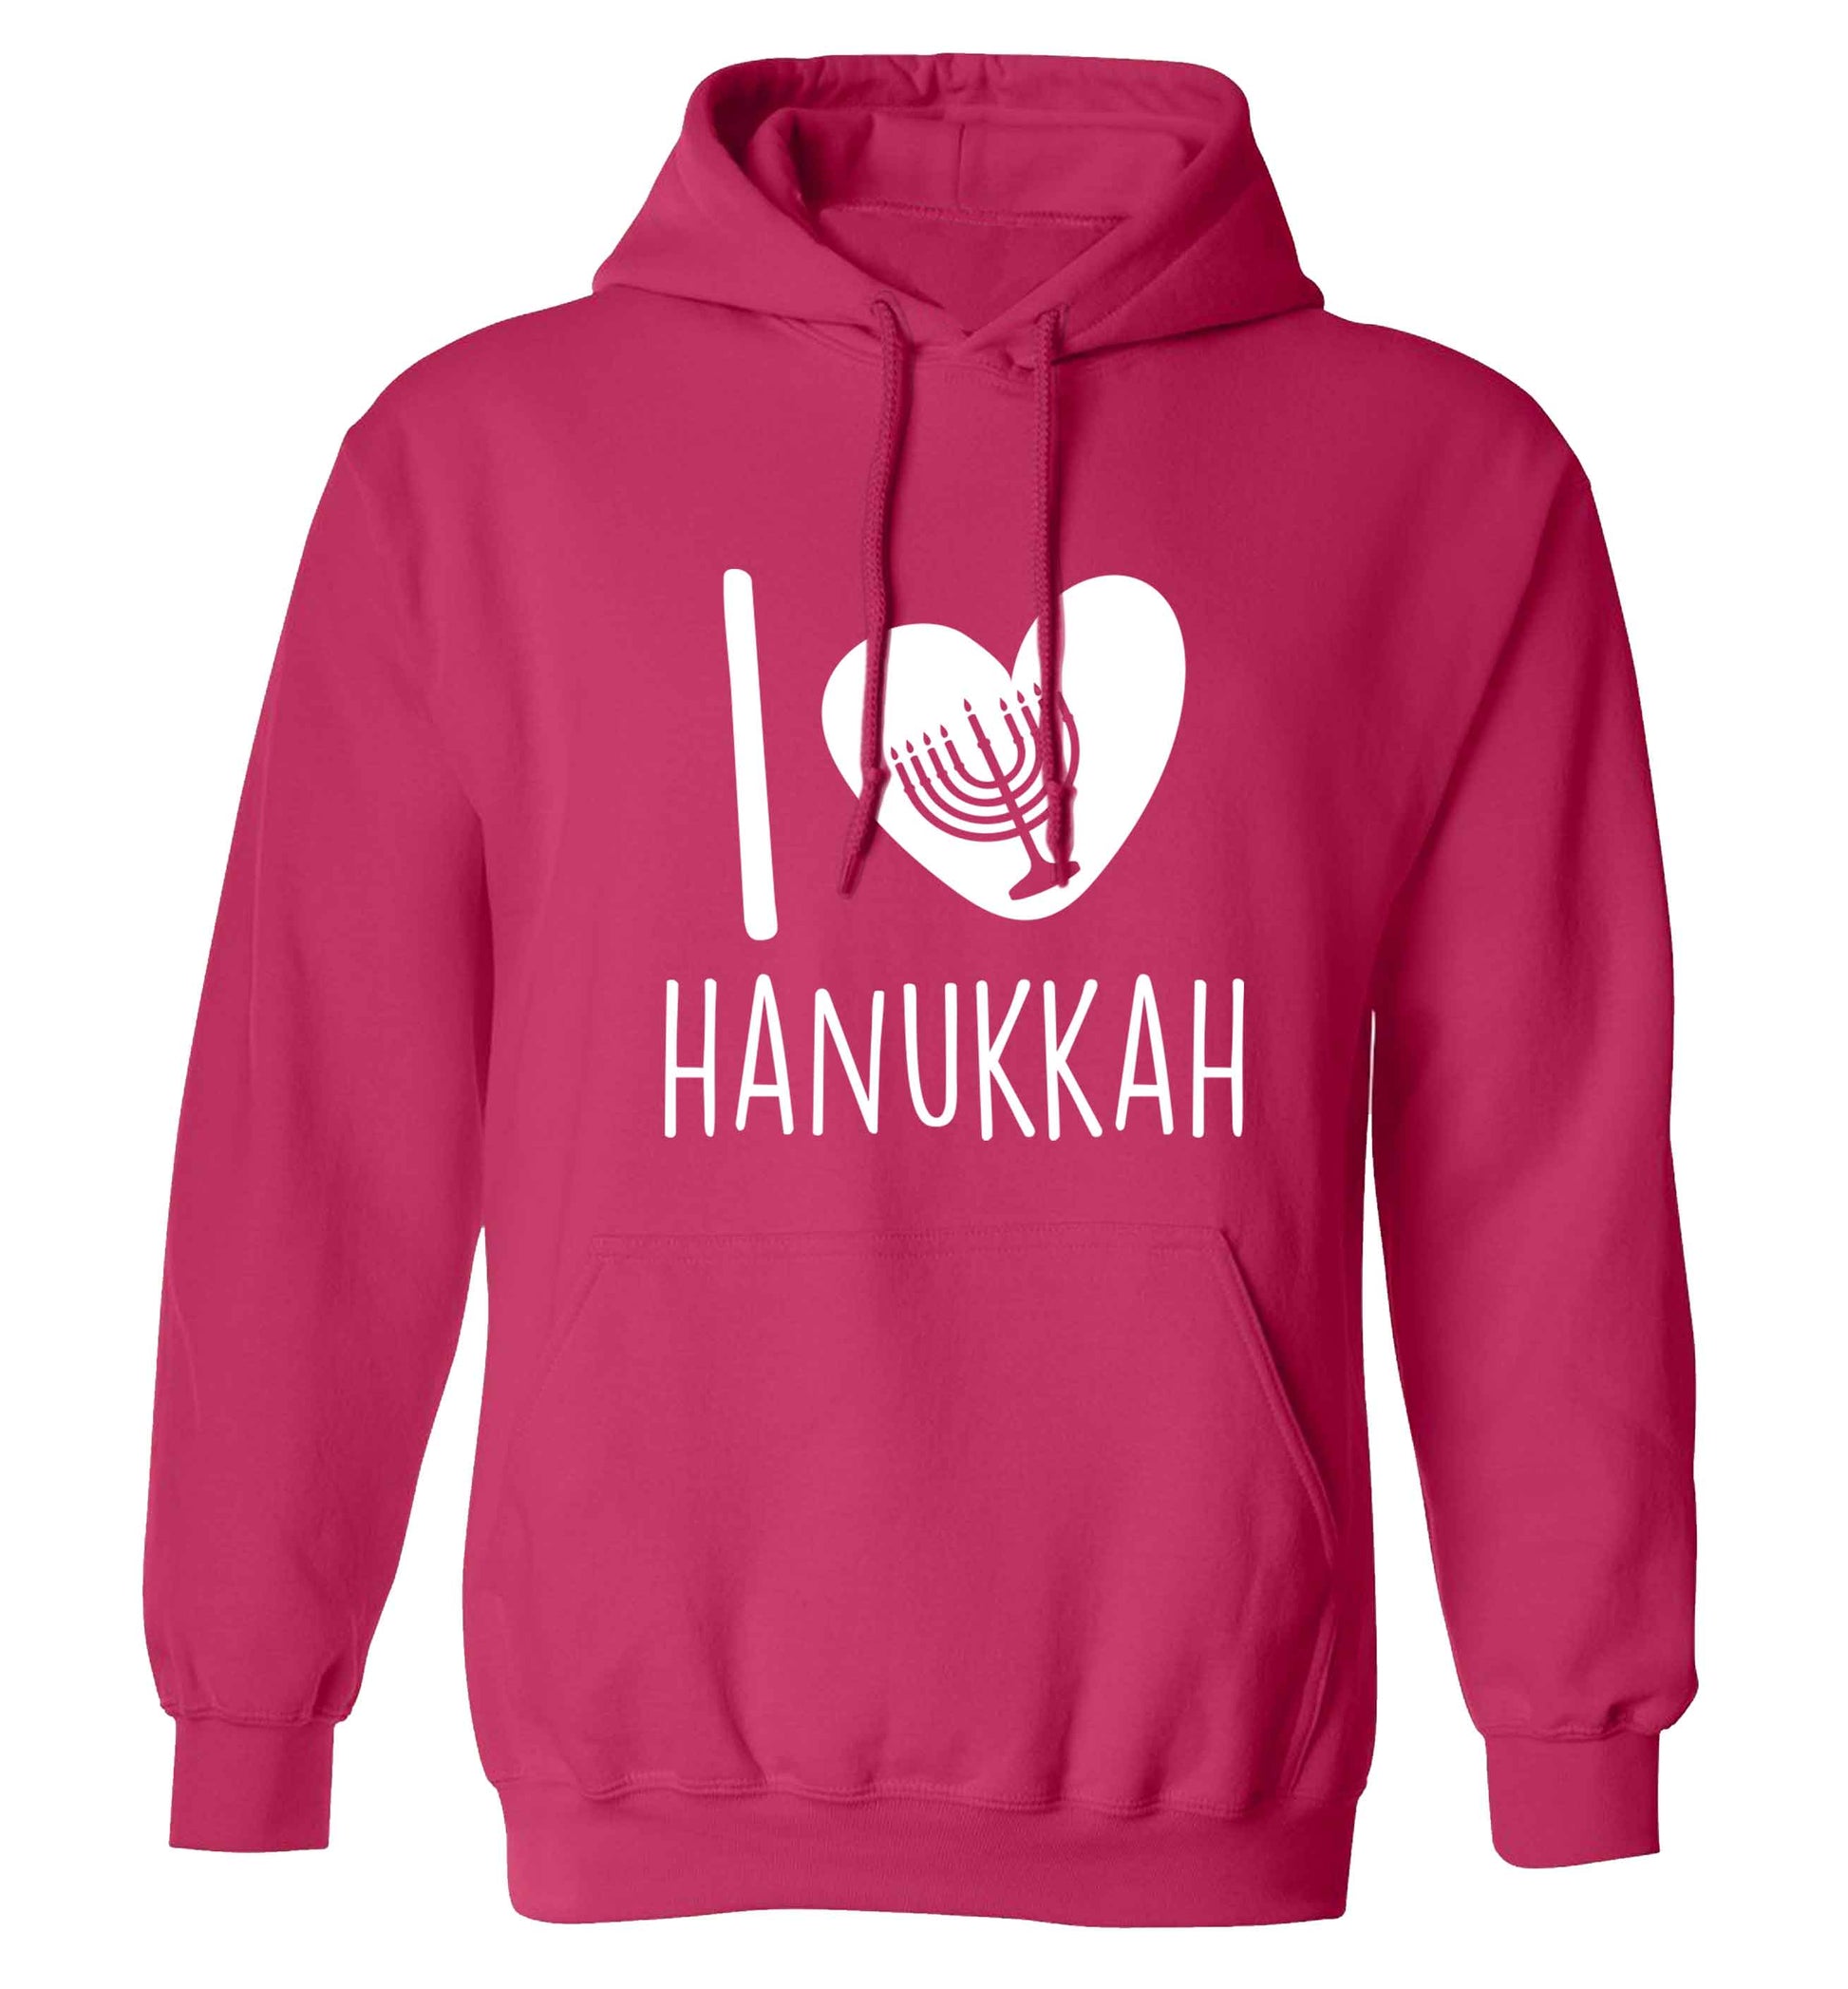 I love hanukkah adults unisex pink hoodie 2XL